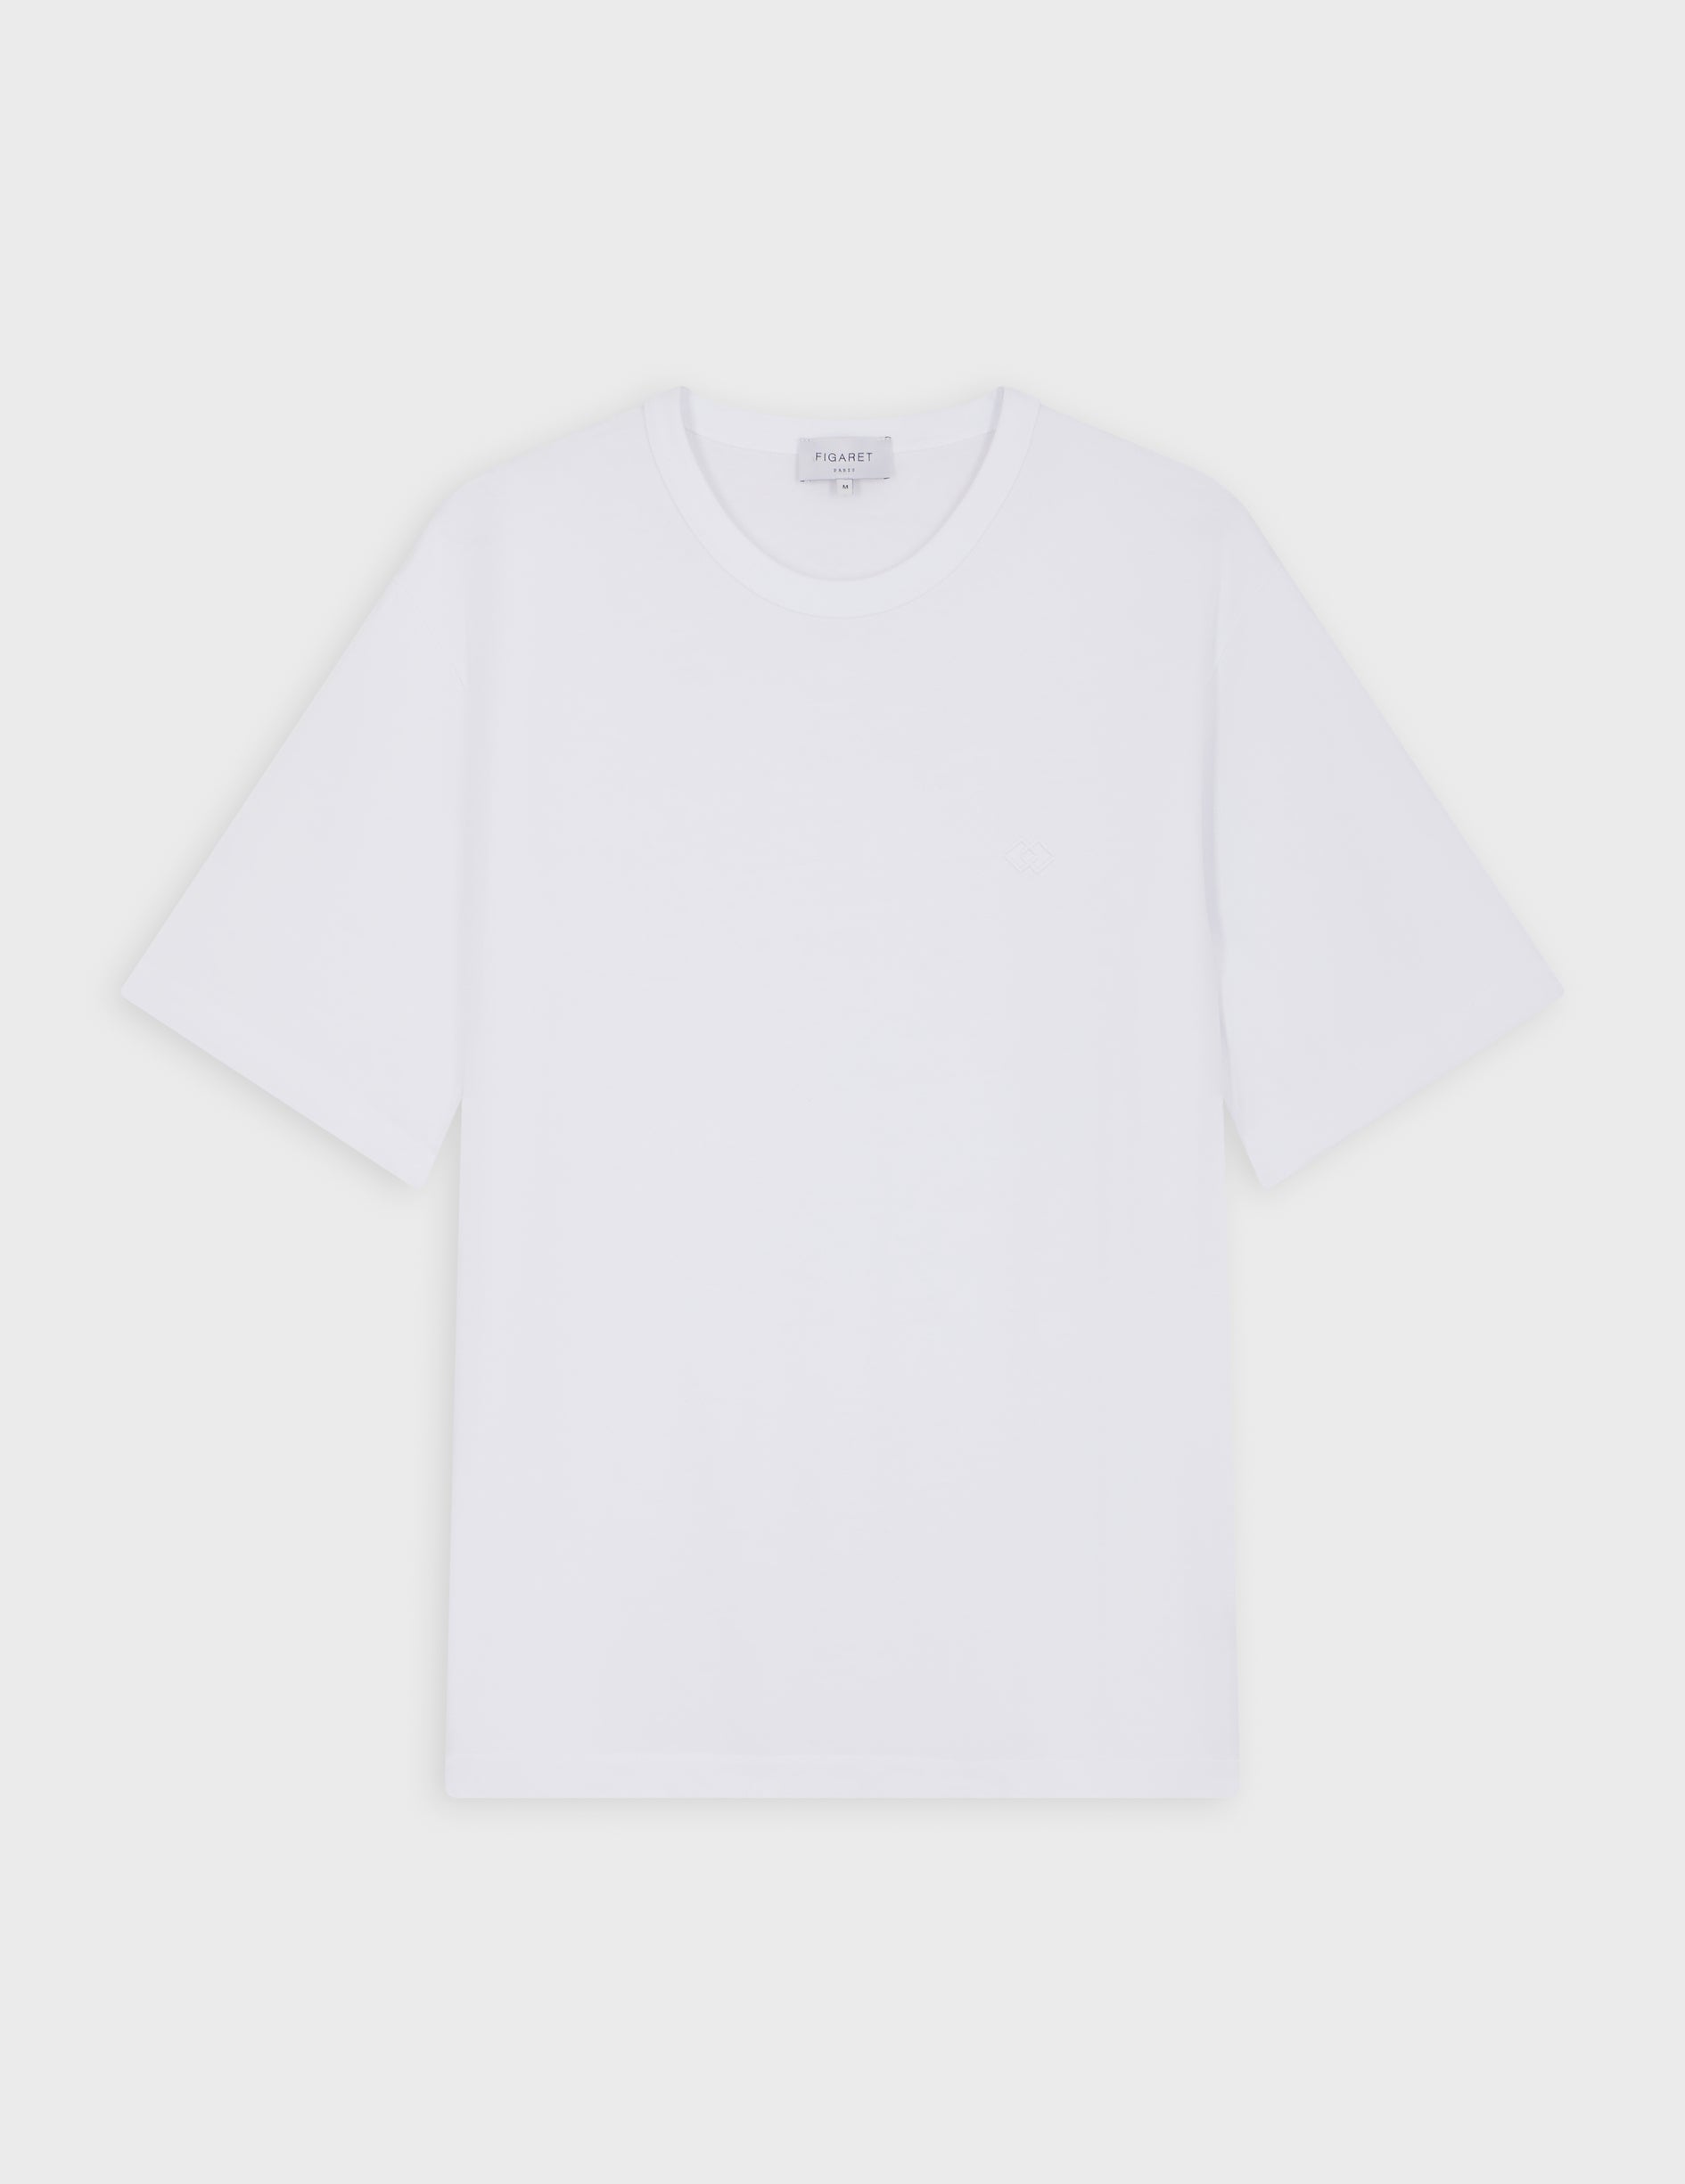 White cotton Benny t-shirt